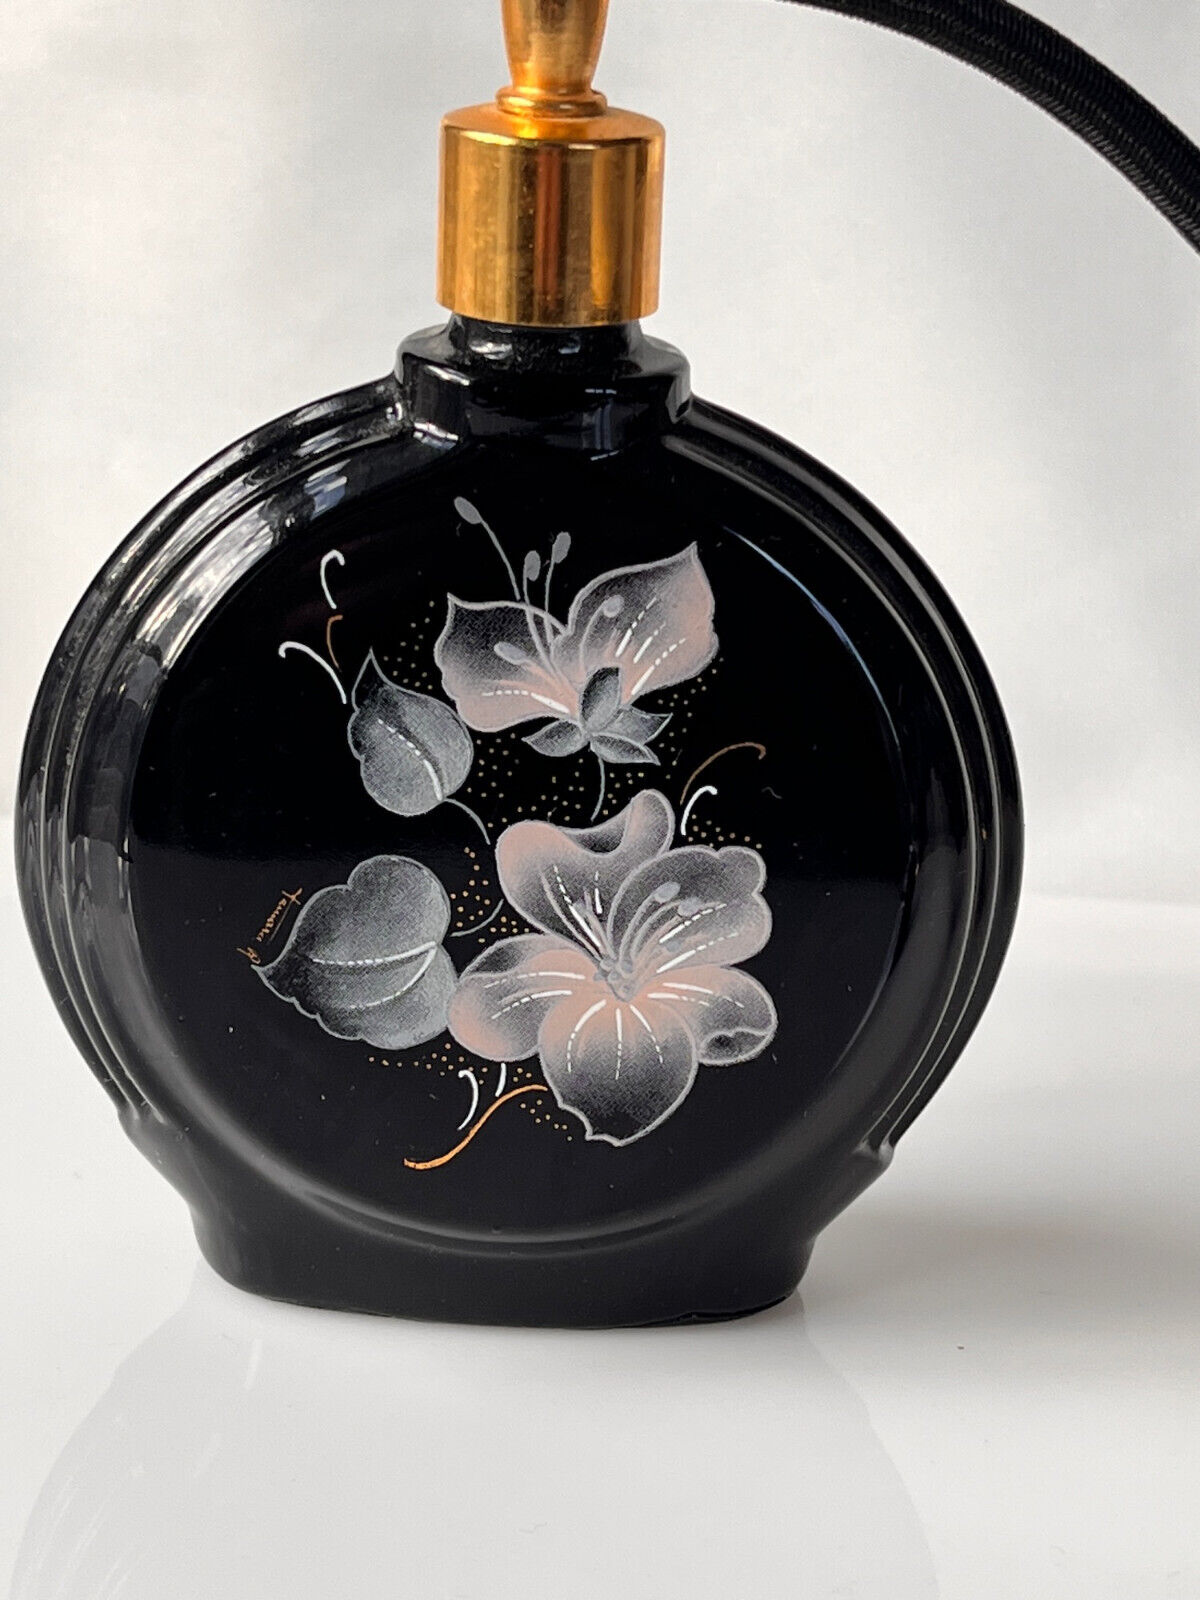 Vintage French Perfume Atomizer Bottle Flask Black Flower Perfume Scent Bottle